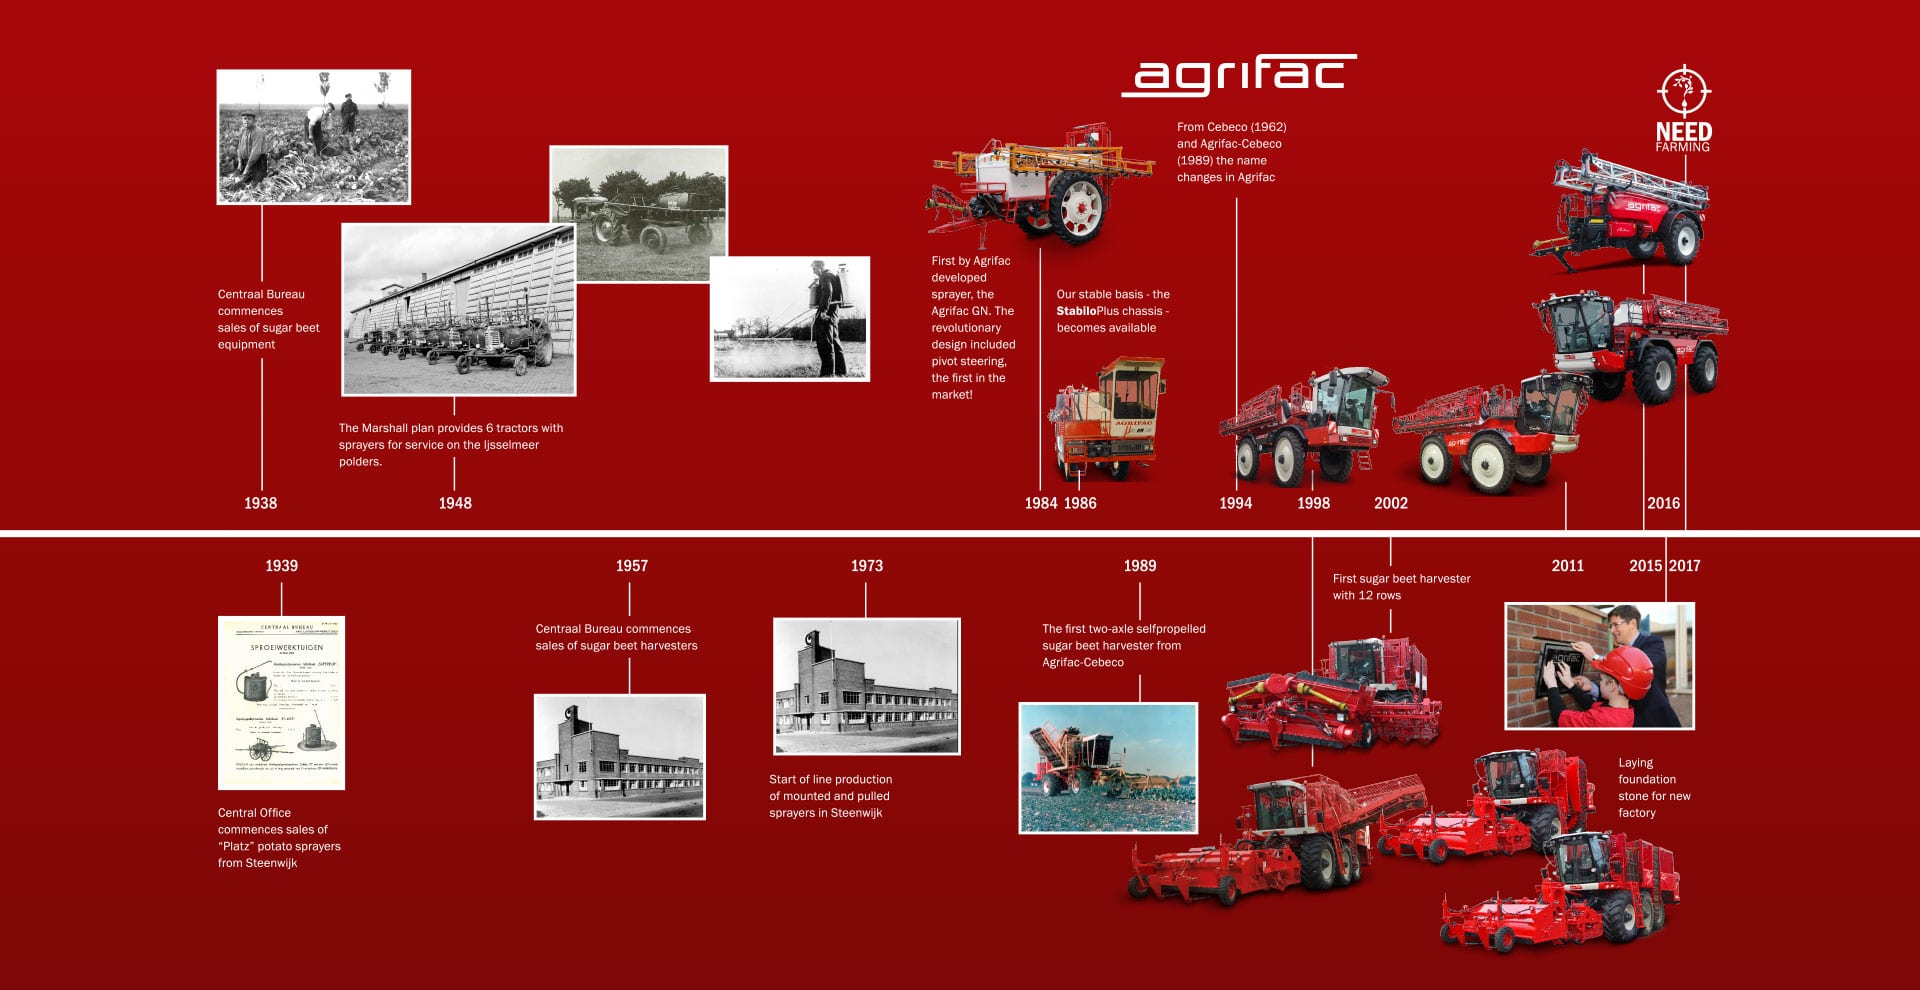 Agrifac machinery timeline